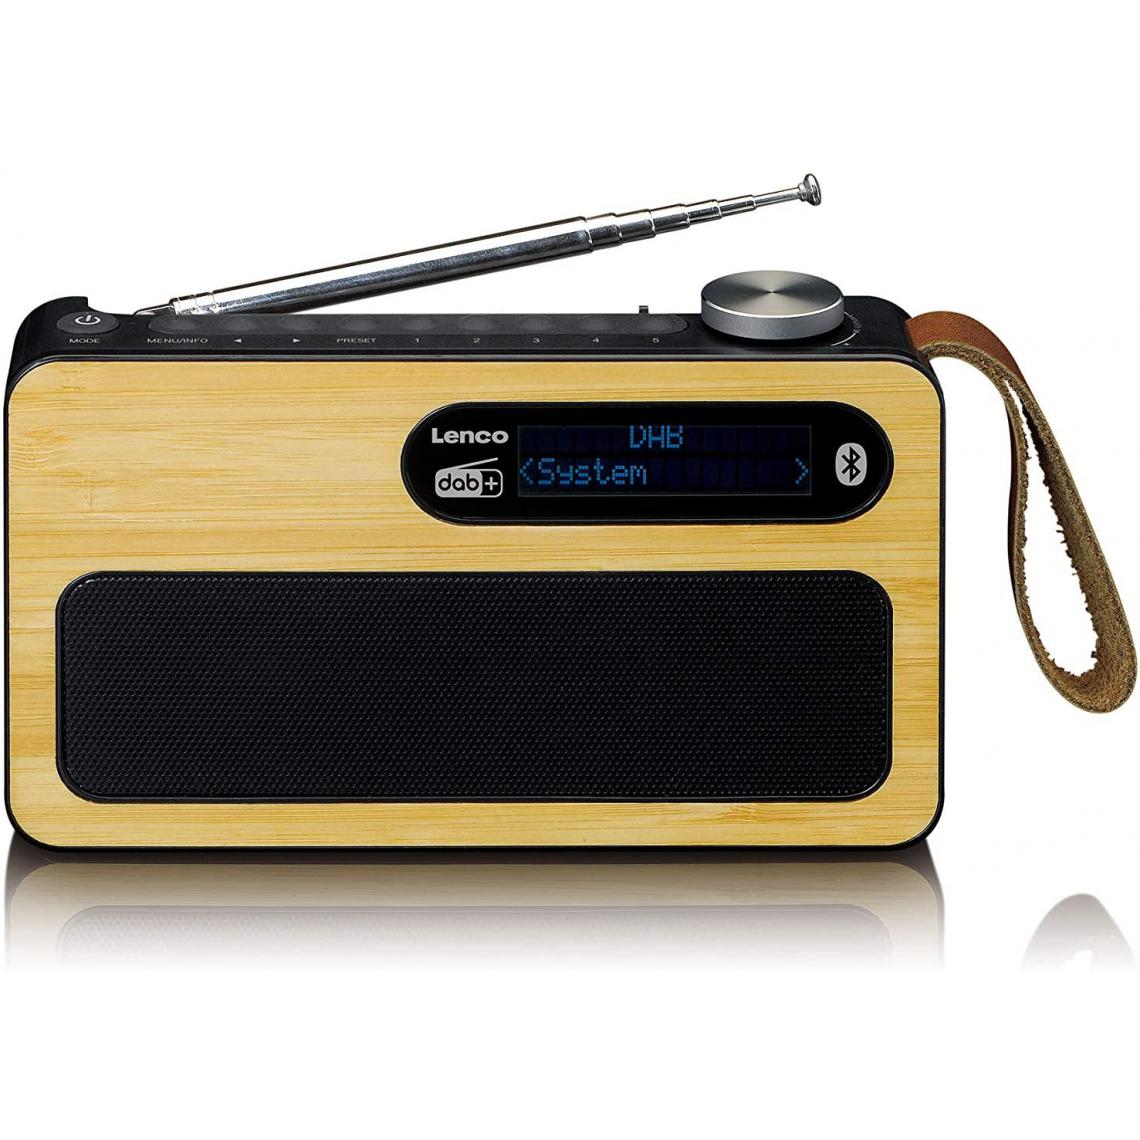 Lenco - radio Portable DAB+ FM Bluetooth avec Batterie intégrée 2000 mAh 3W marron noir - Radio